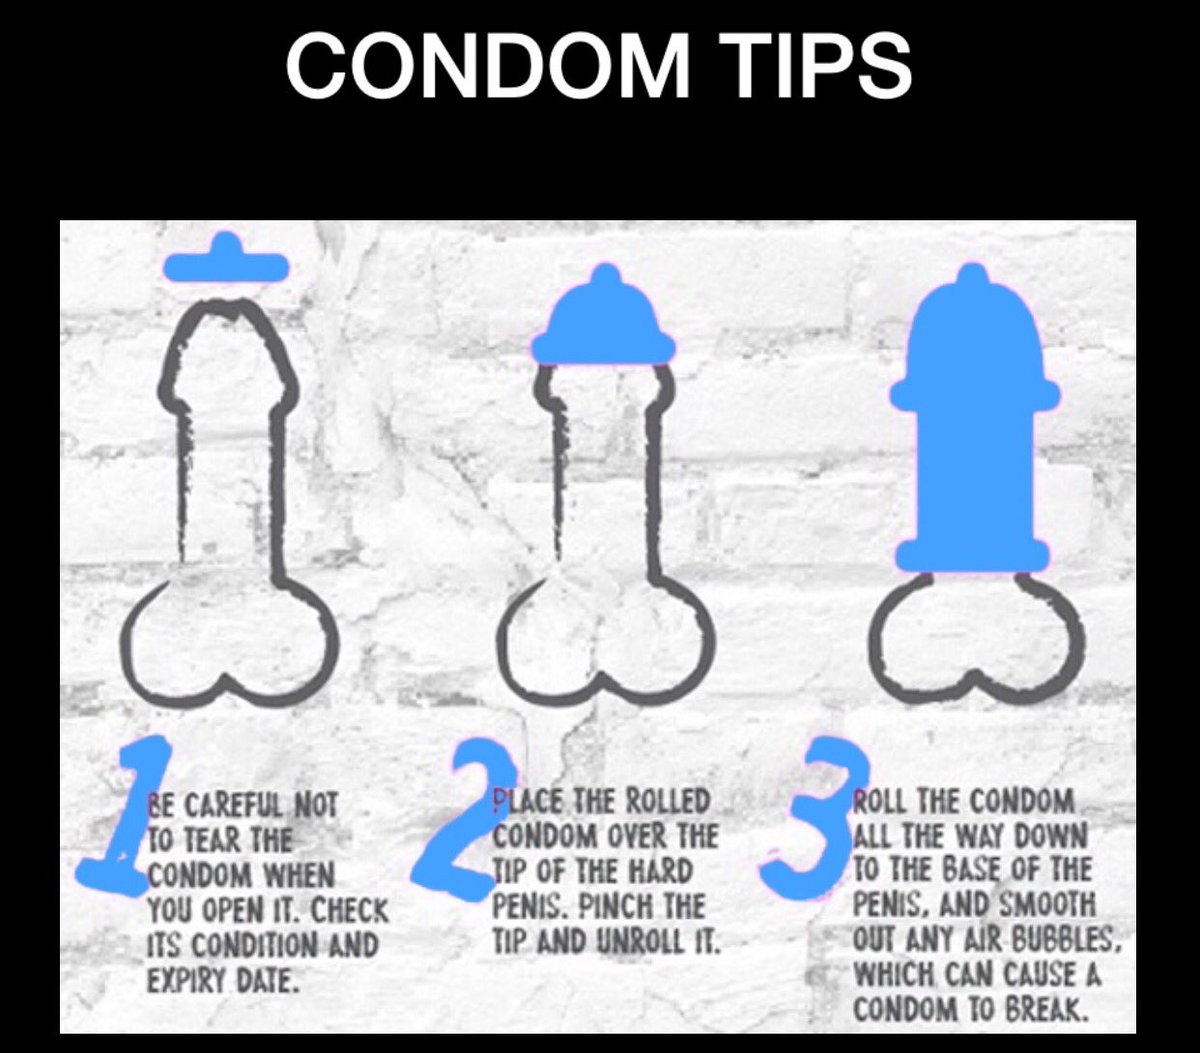 dicks comdoms on